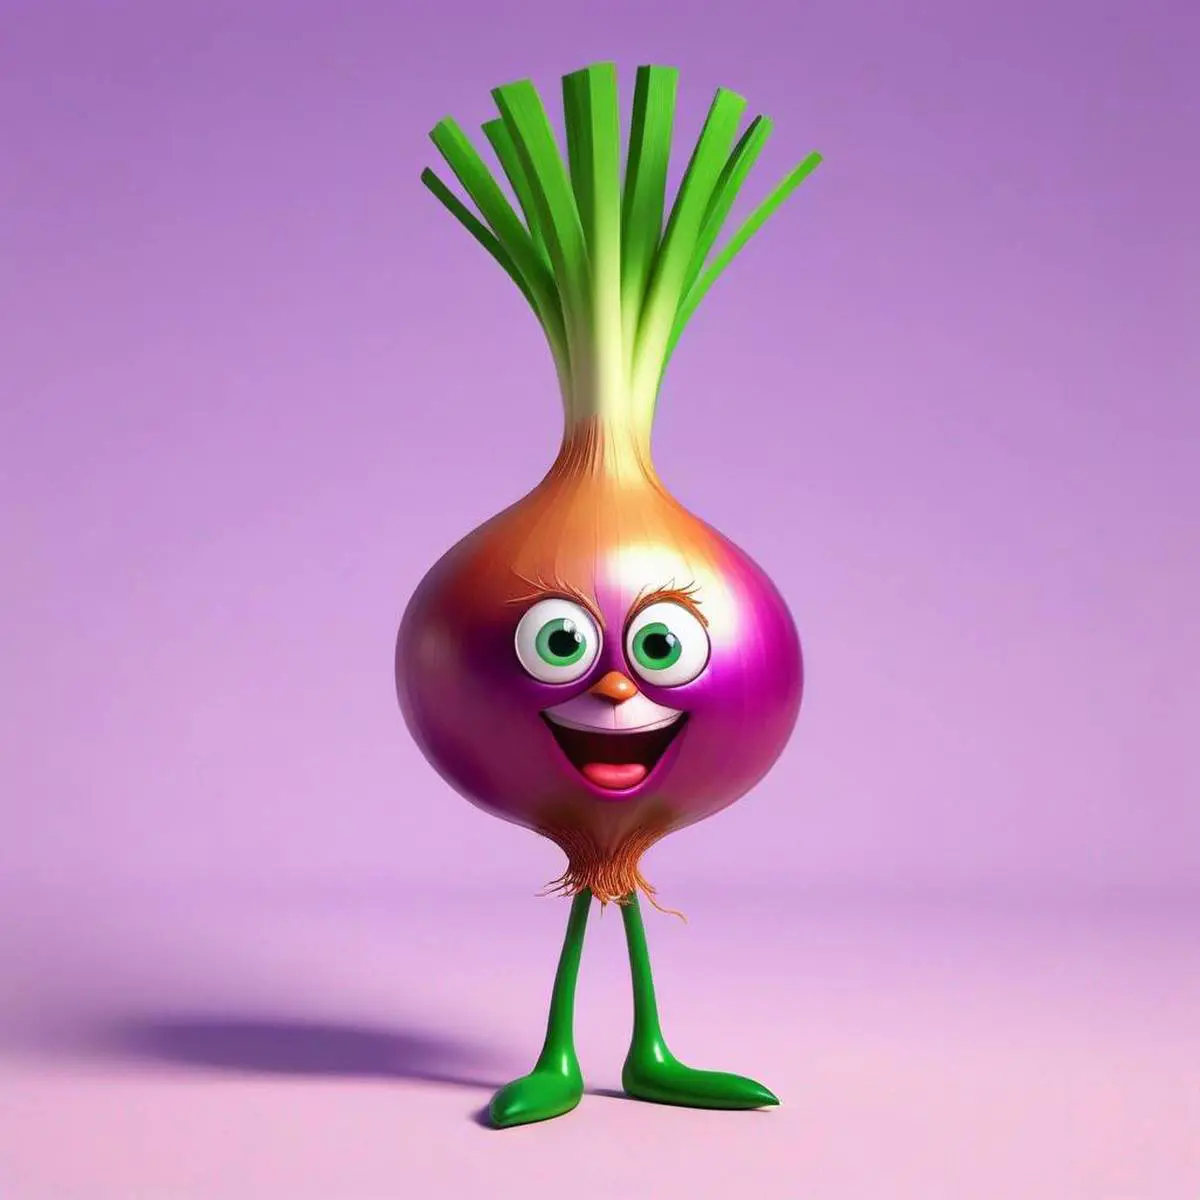 Onion puns